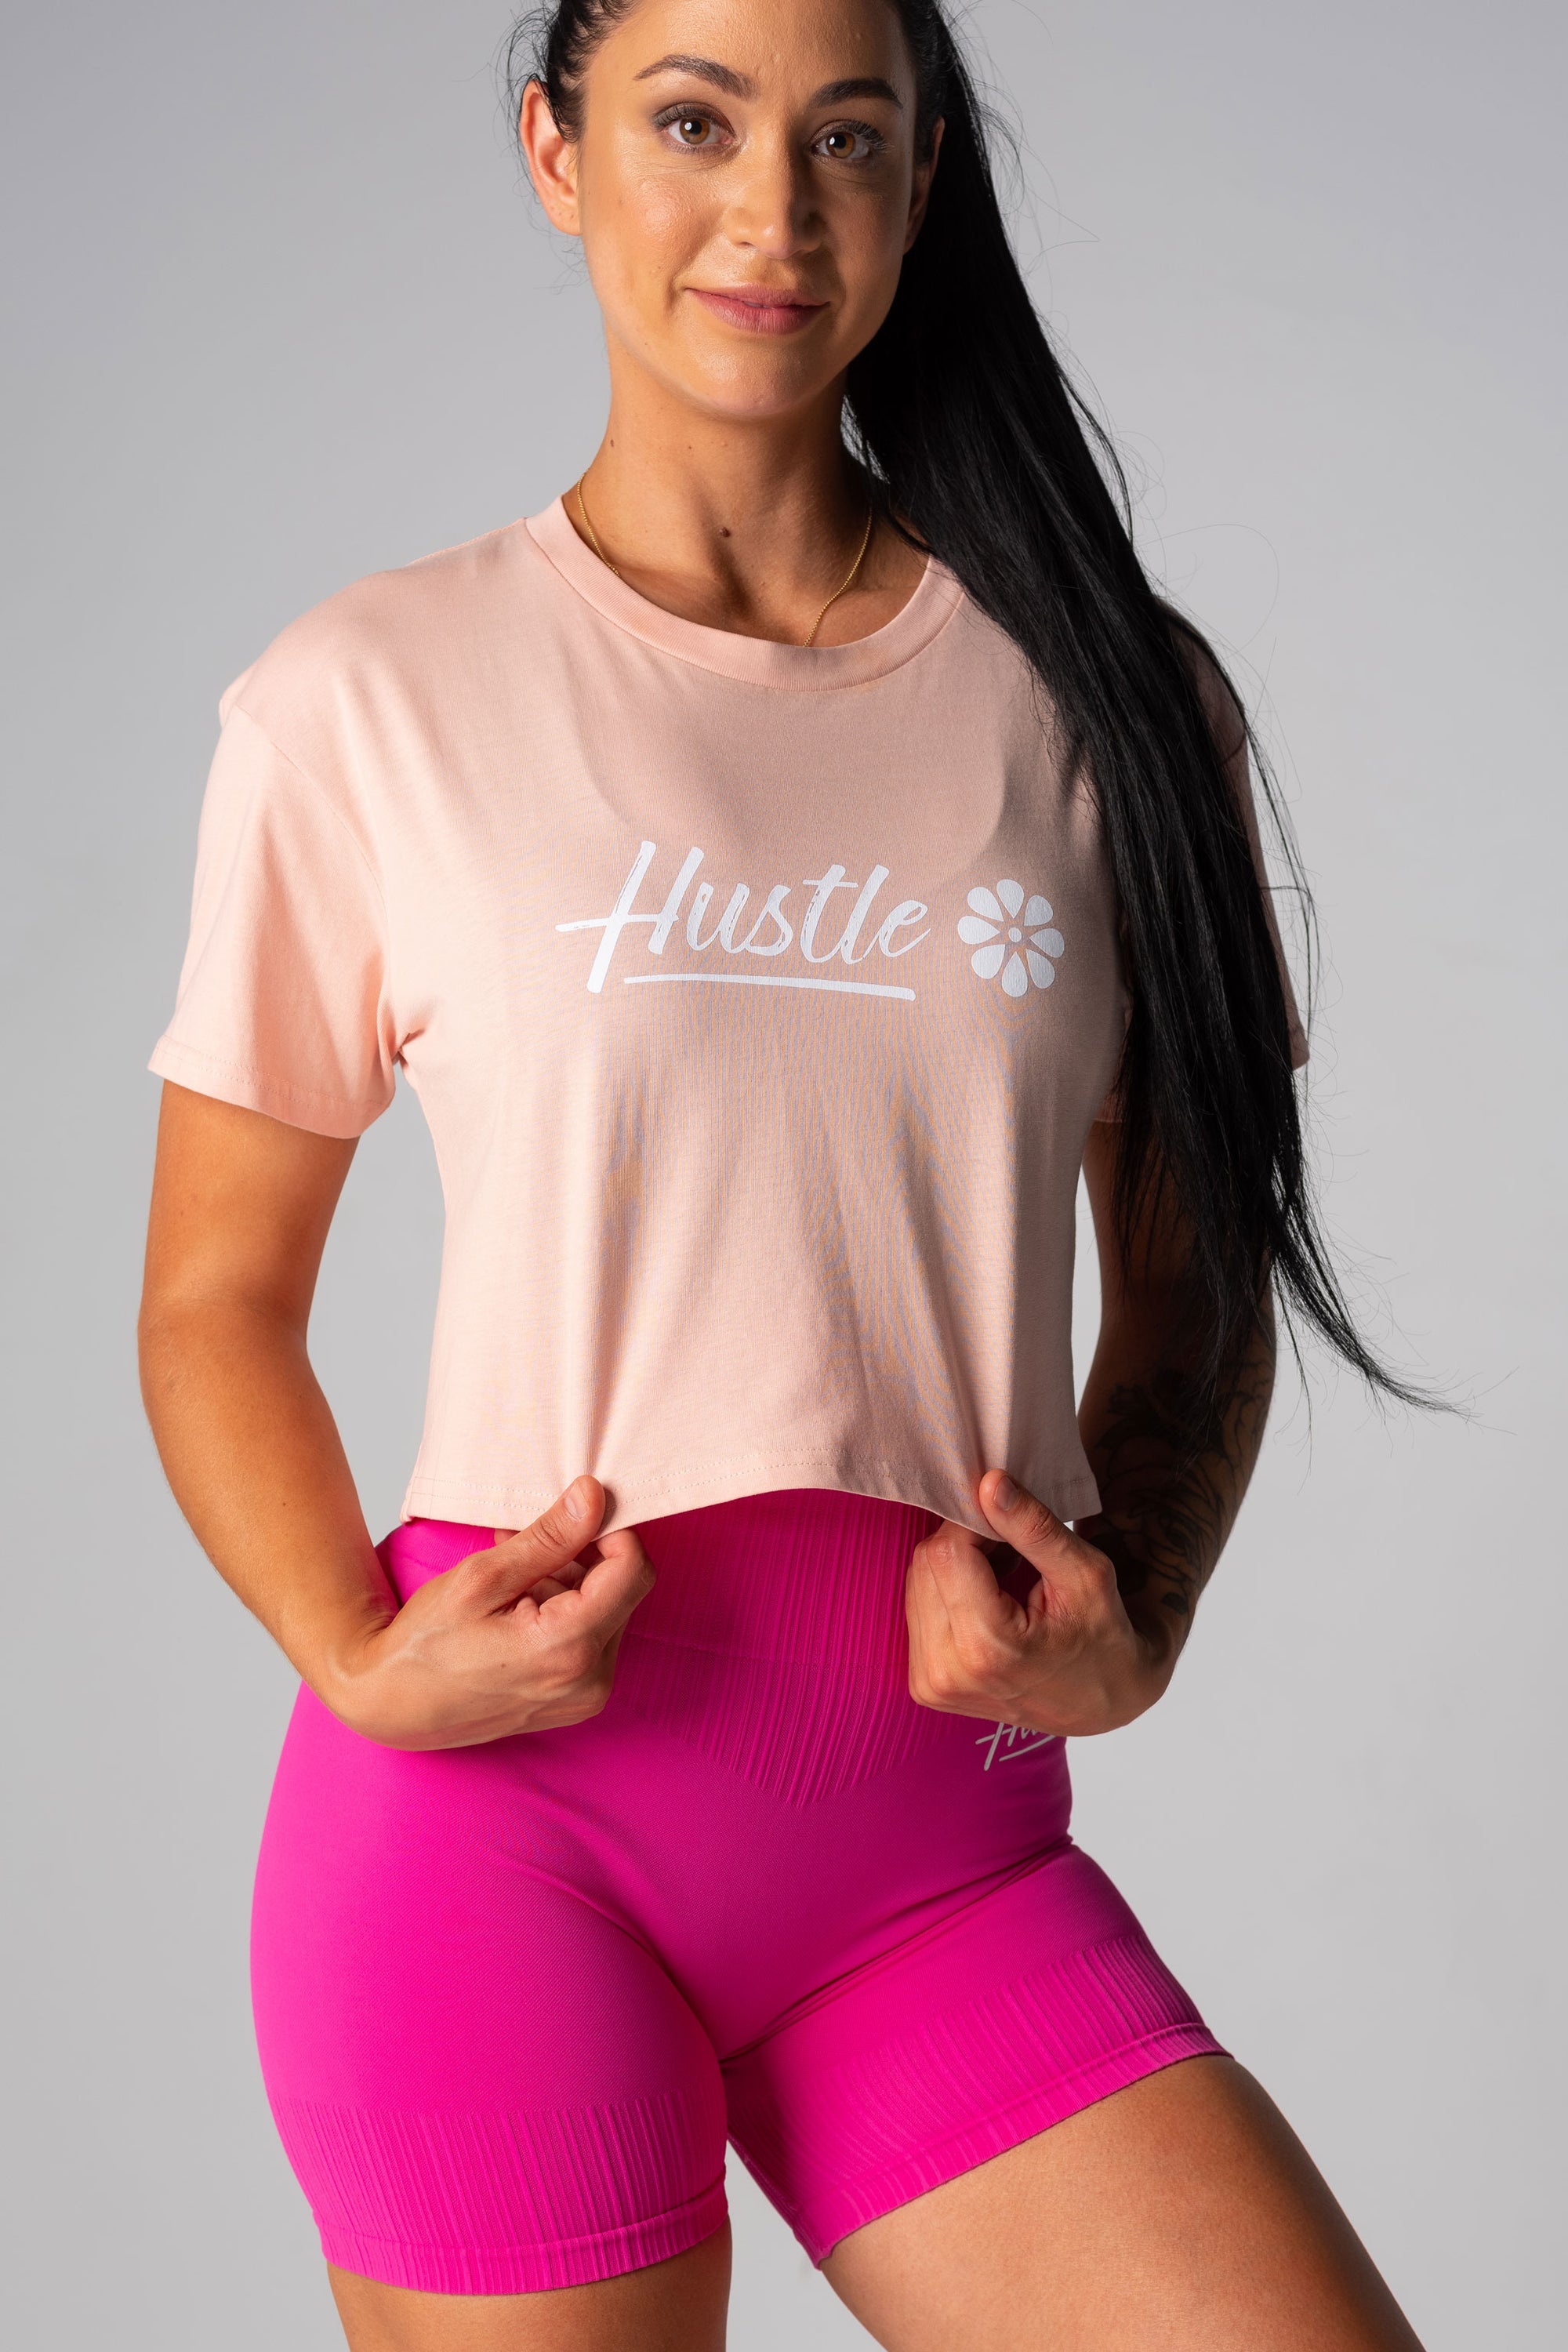 Hustle Cropped Tee Womens Dusty Pink